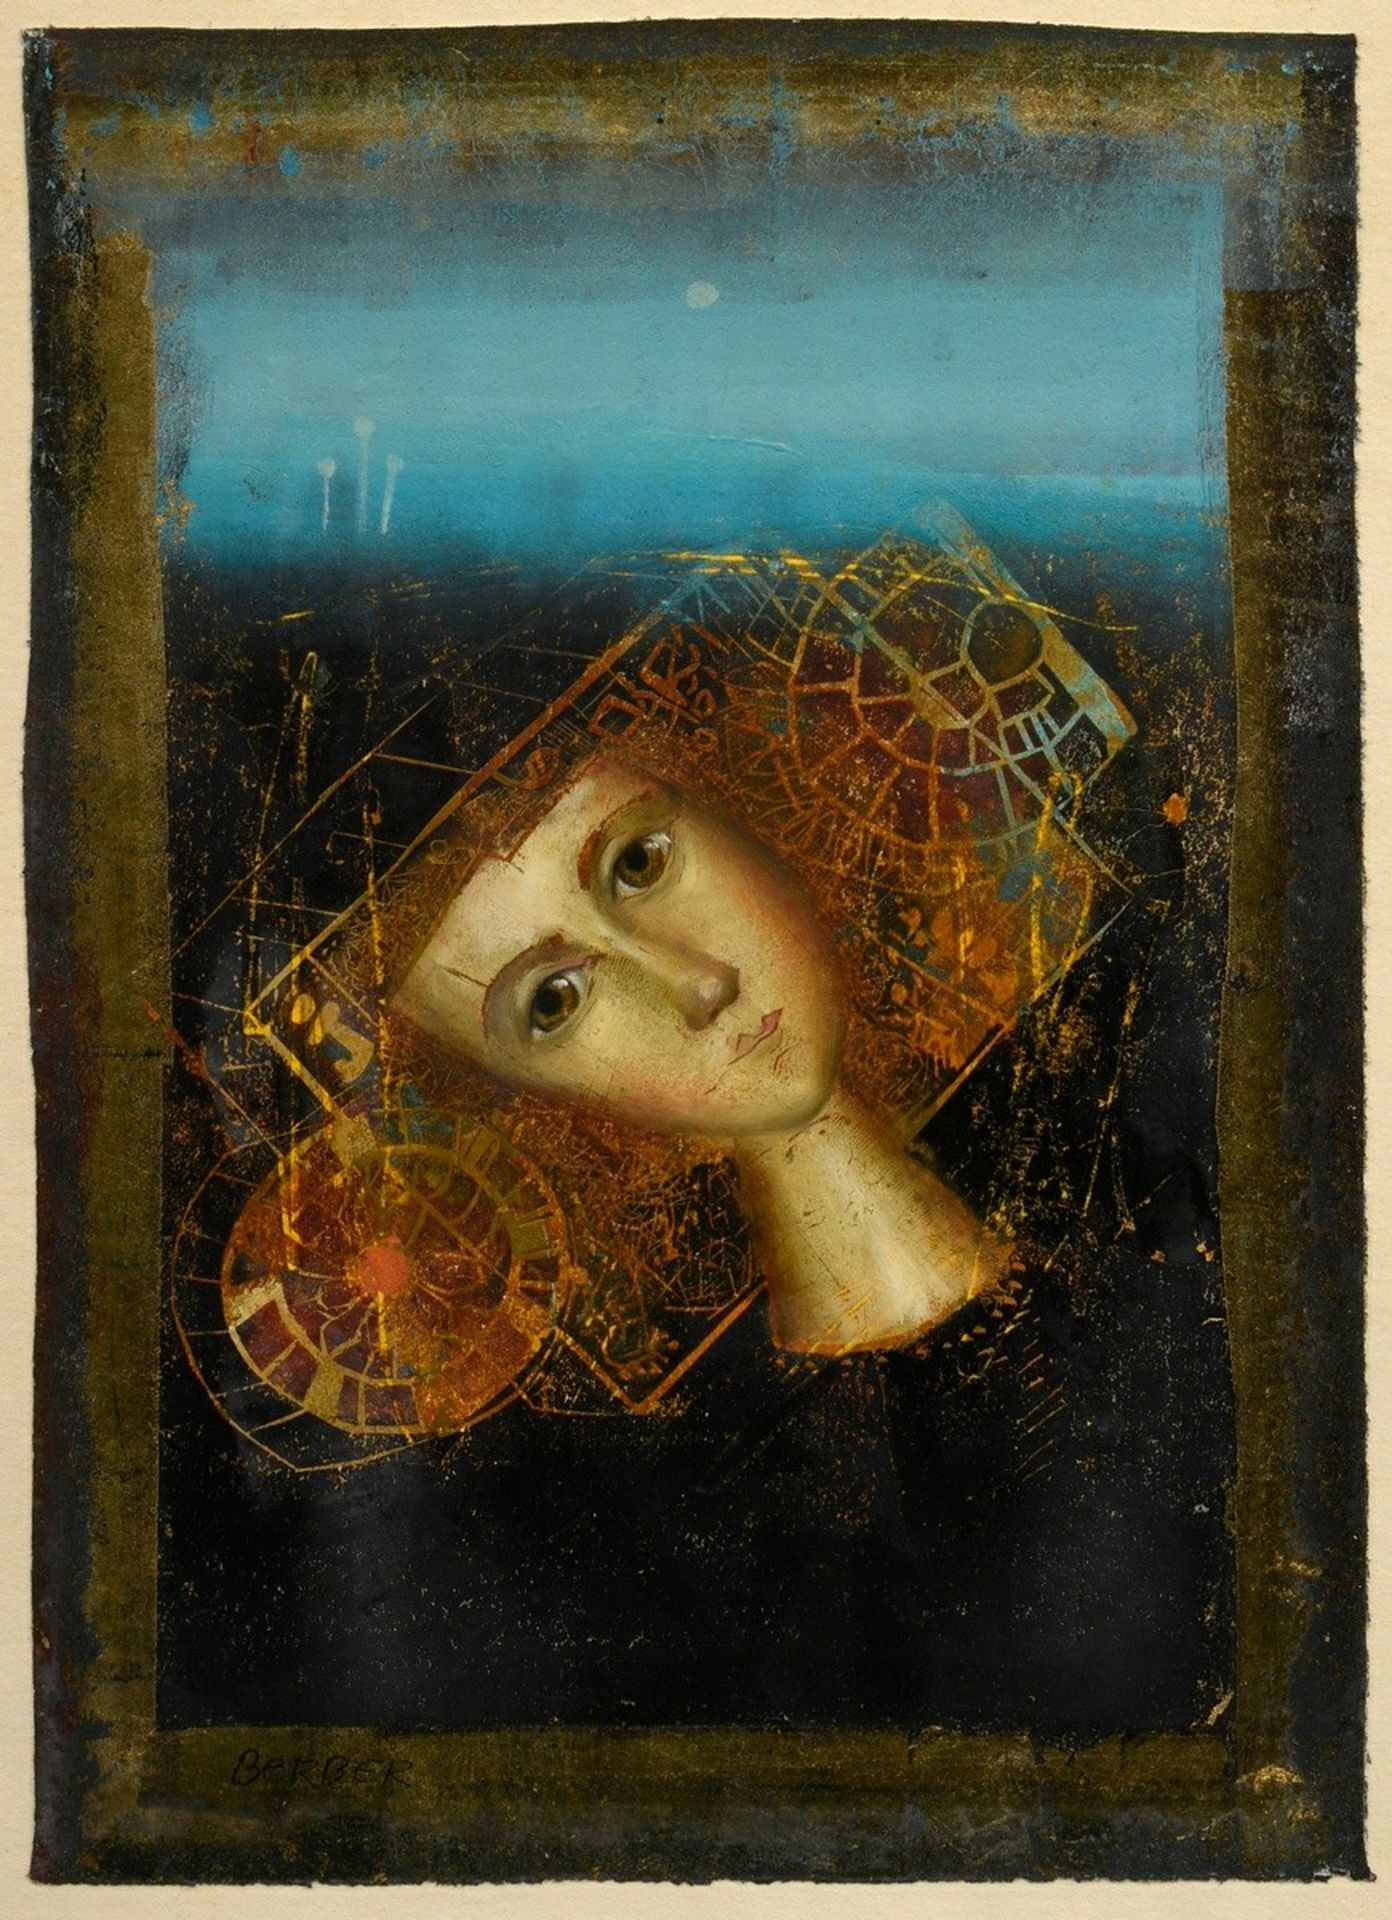 Berber, Mersad (1940-2012) "Girl's head in front of a light blue horizon", woodcut/mixed media/gold